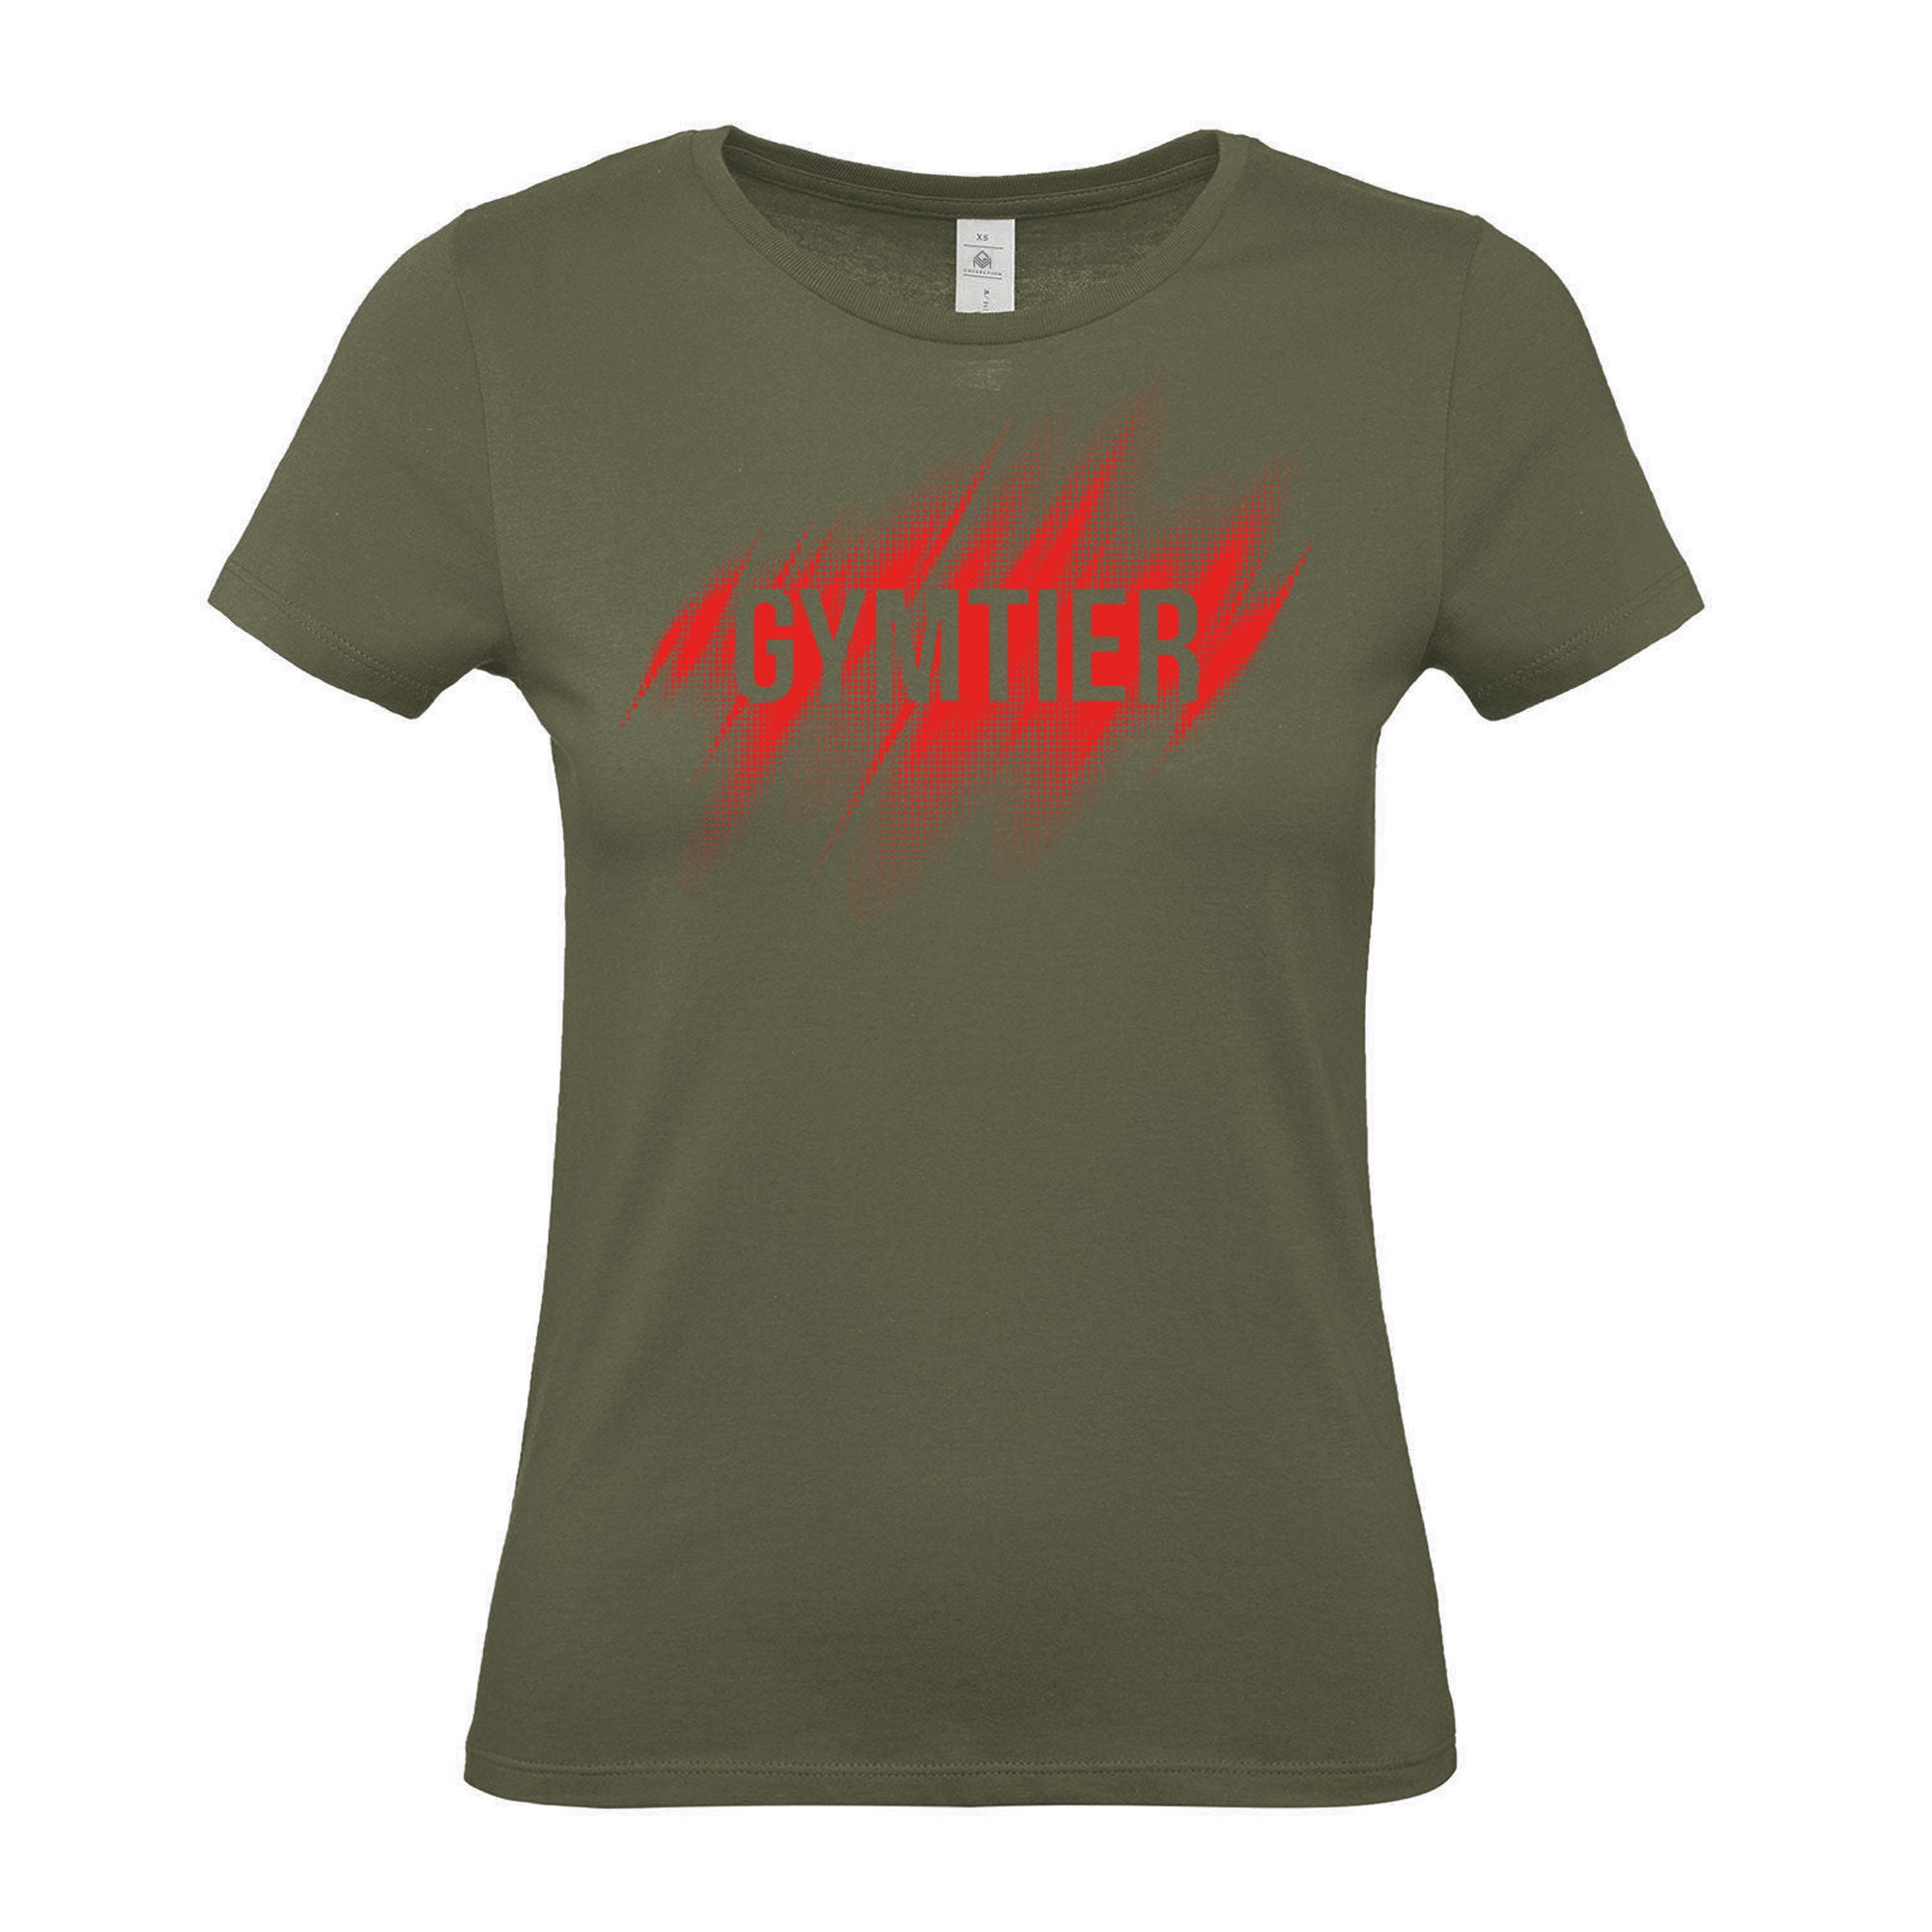 Pixel Streak - Women's Gym T-Shirt